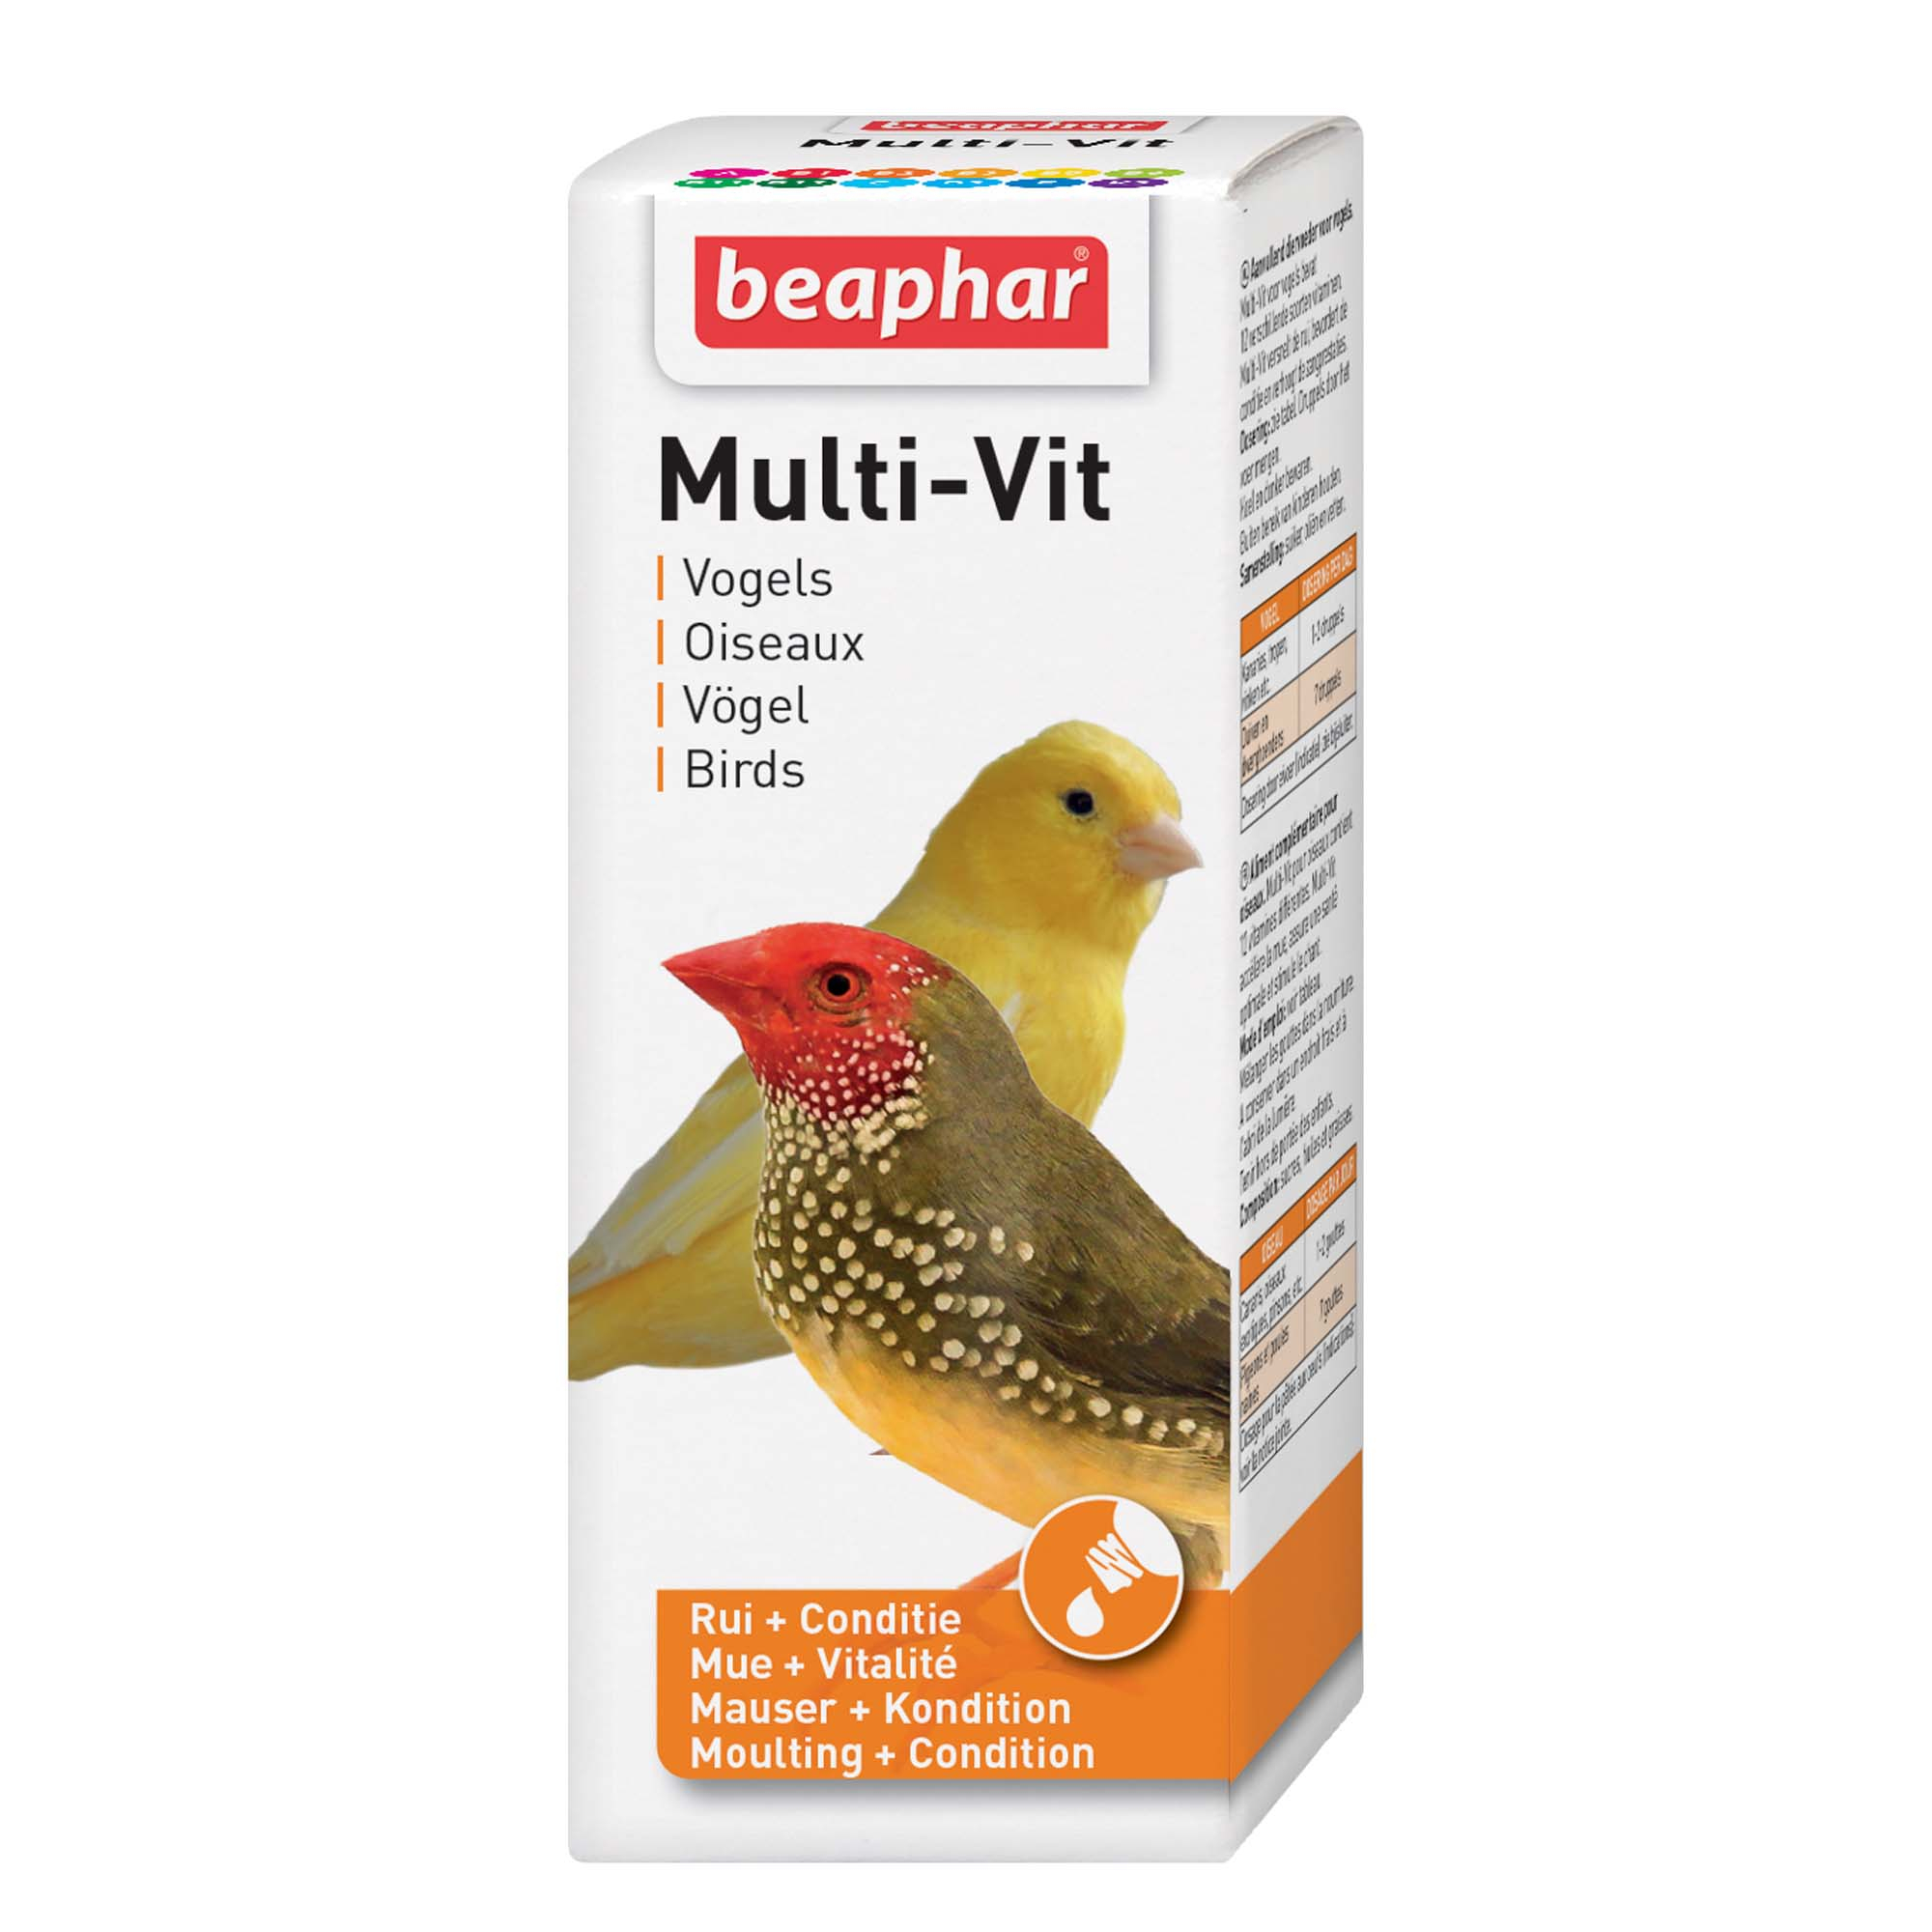 Multi-vit, vitamines voor vogels